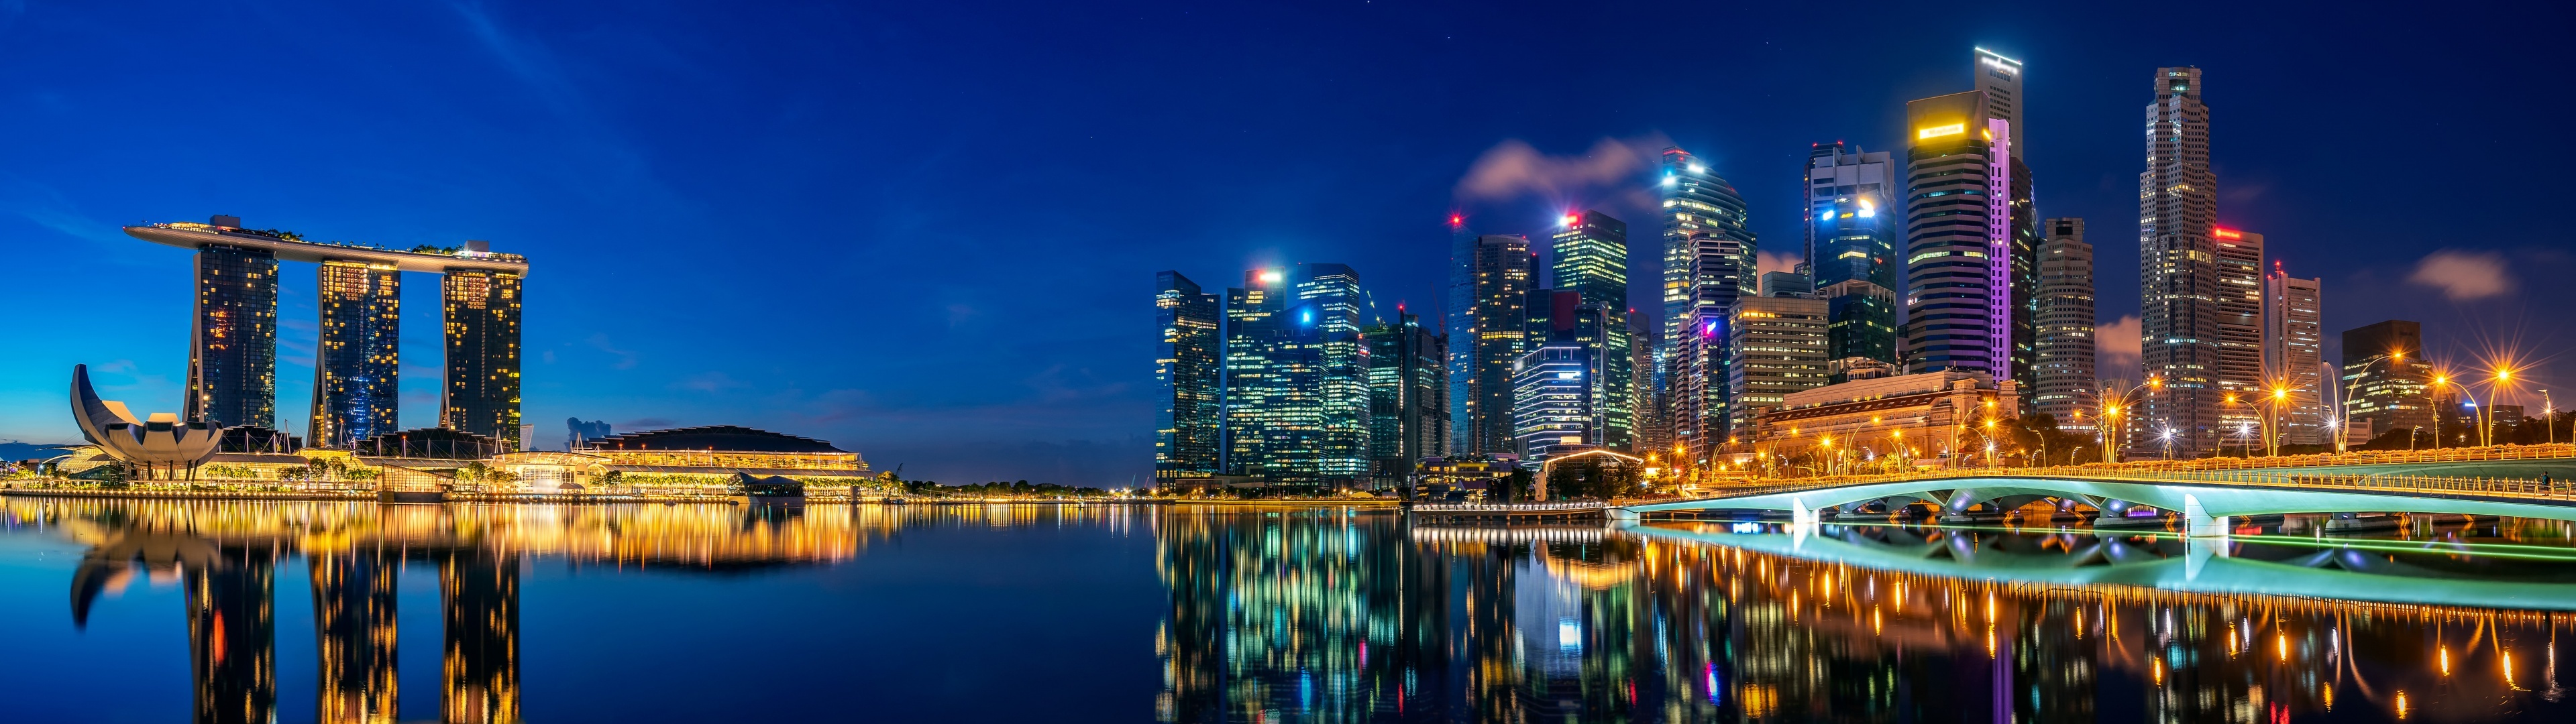 Singapore Skyline, Marina Bay Sands, Downtown cityscape, World view, 3840x1080 Dual Screen Desktop